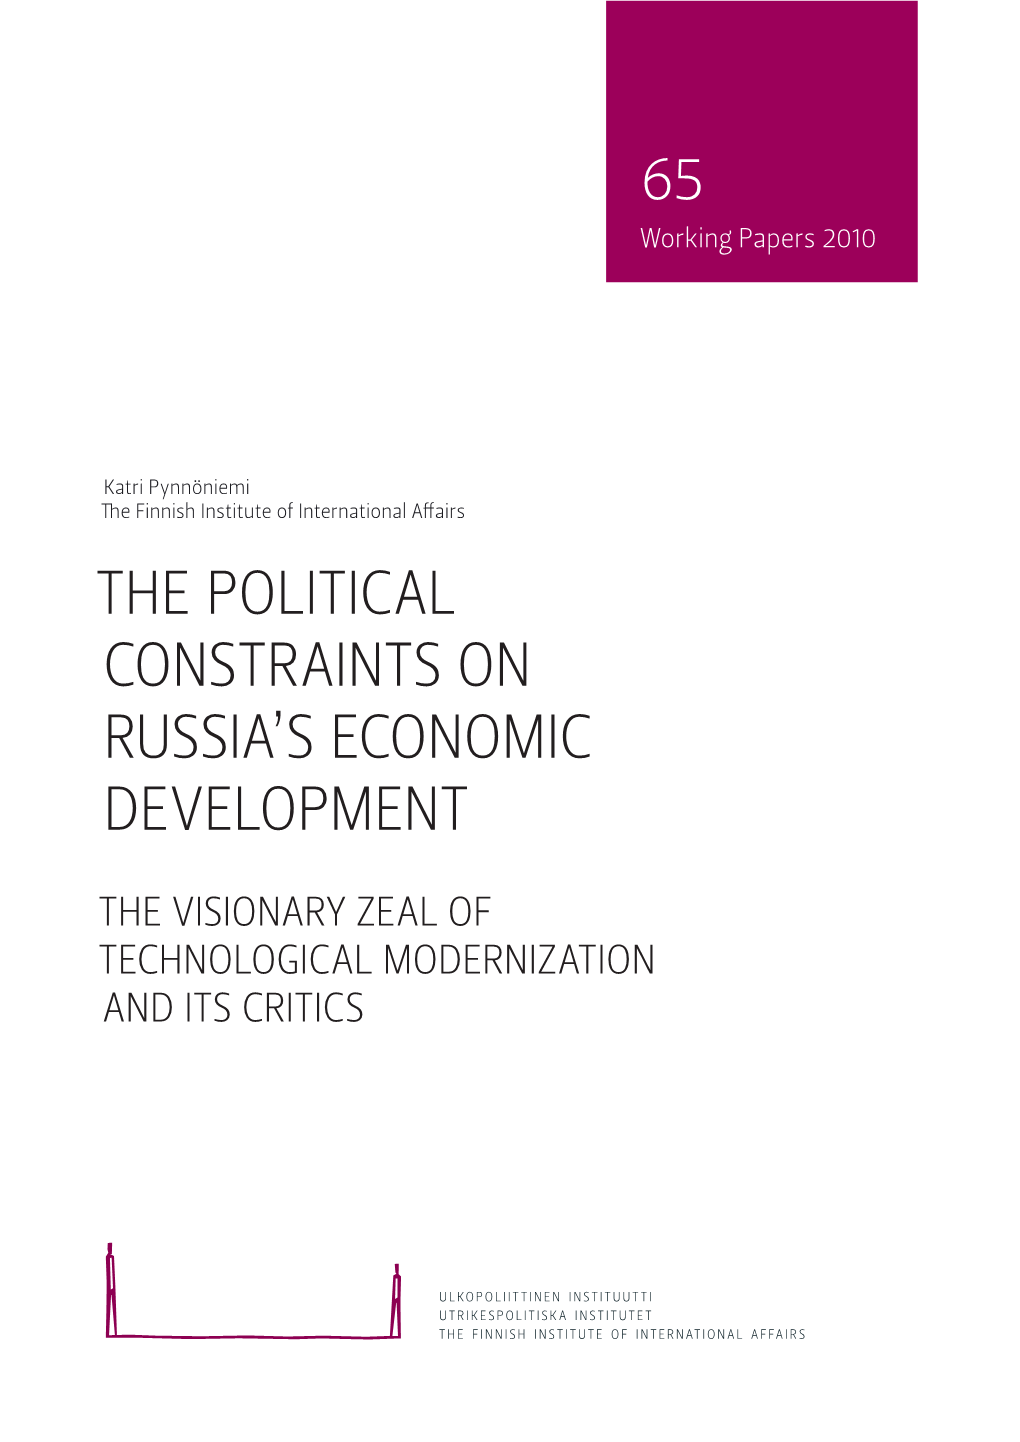 The Political Constraints on Russia's Economic Development